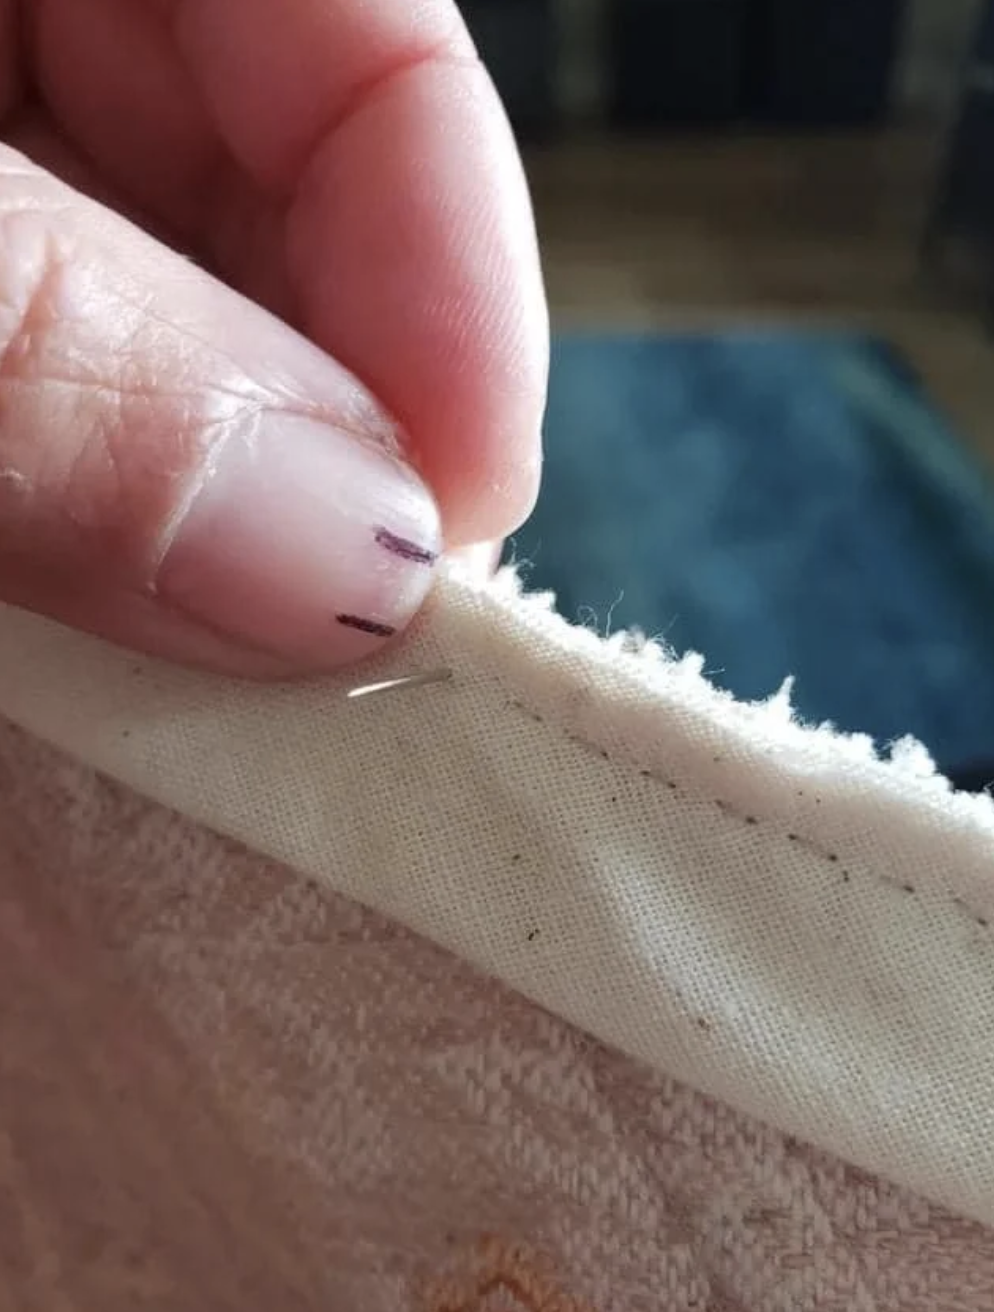 Closeup of someone sewing